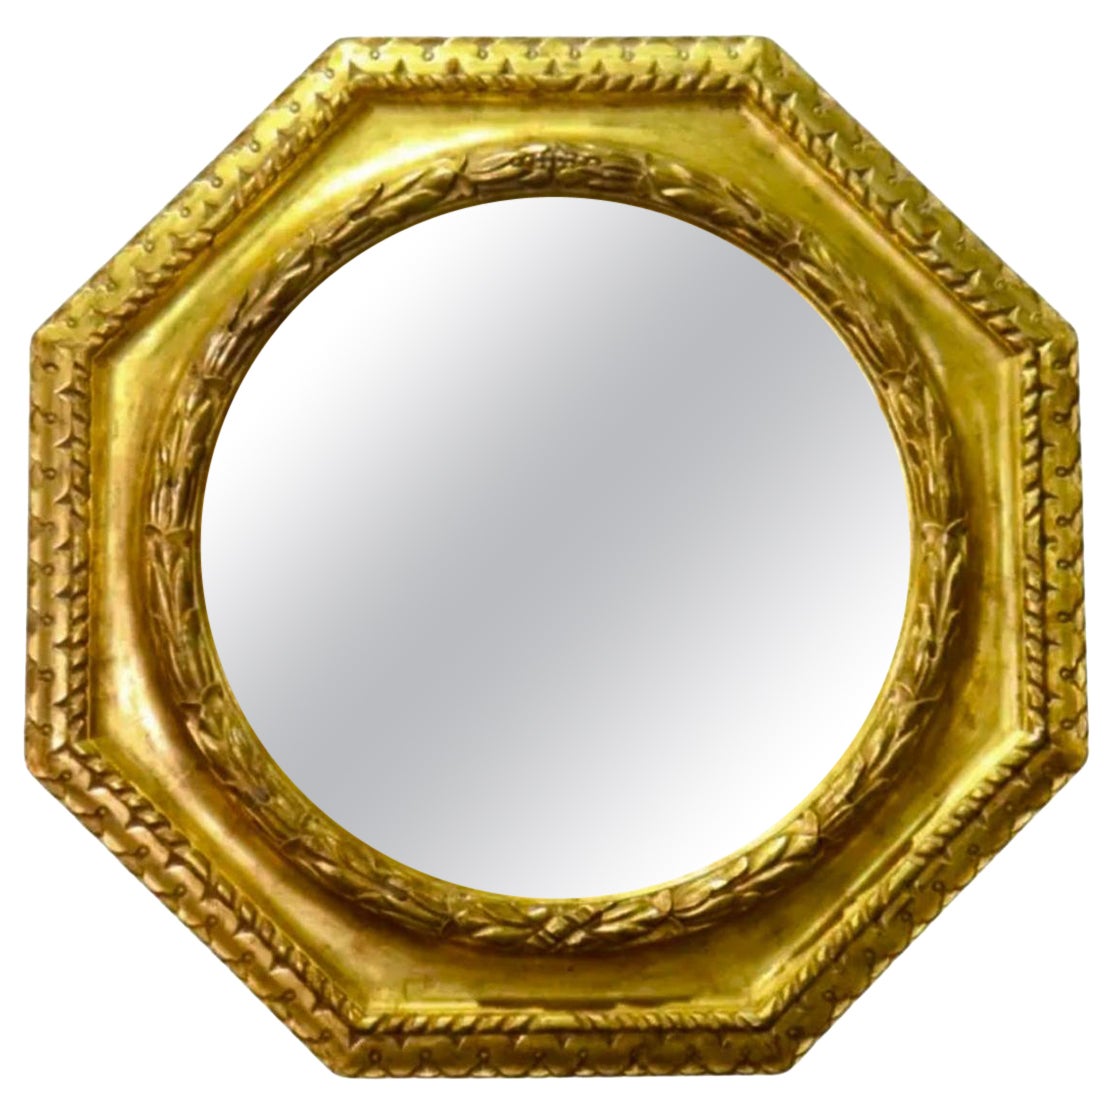 Huge Paul Ferrante Regency Octagonal Giltwood Mirror With Bevel